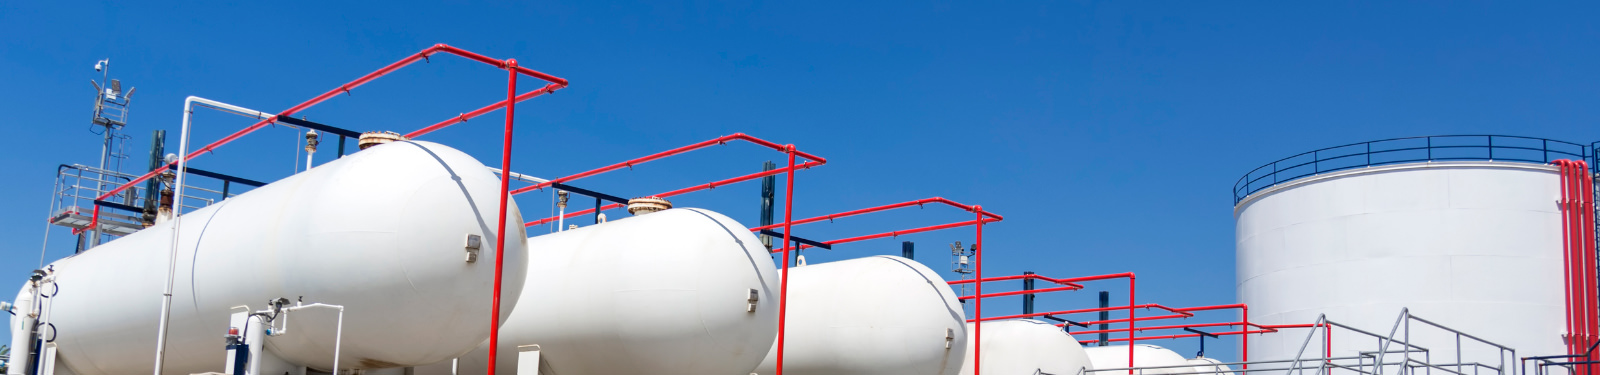 Storage Flow Measurement - Industrial Gas